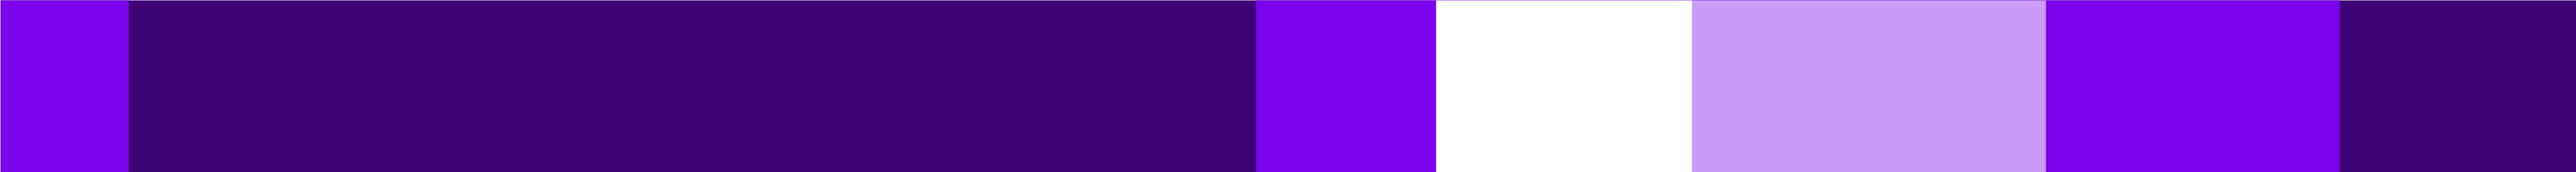 Decorative purple banner